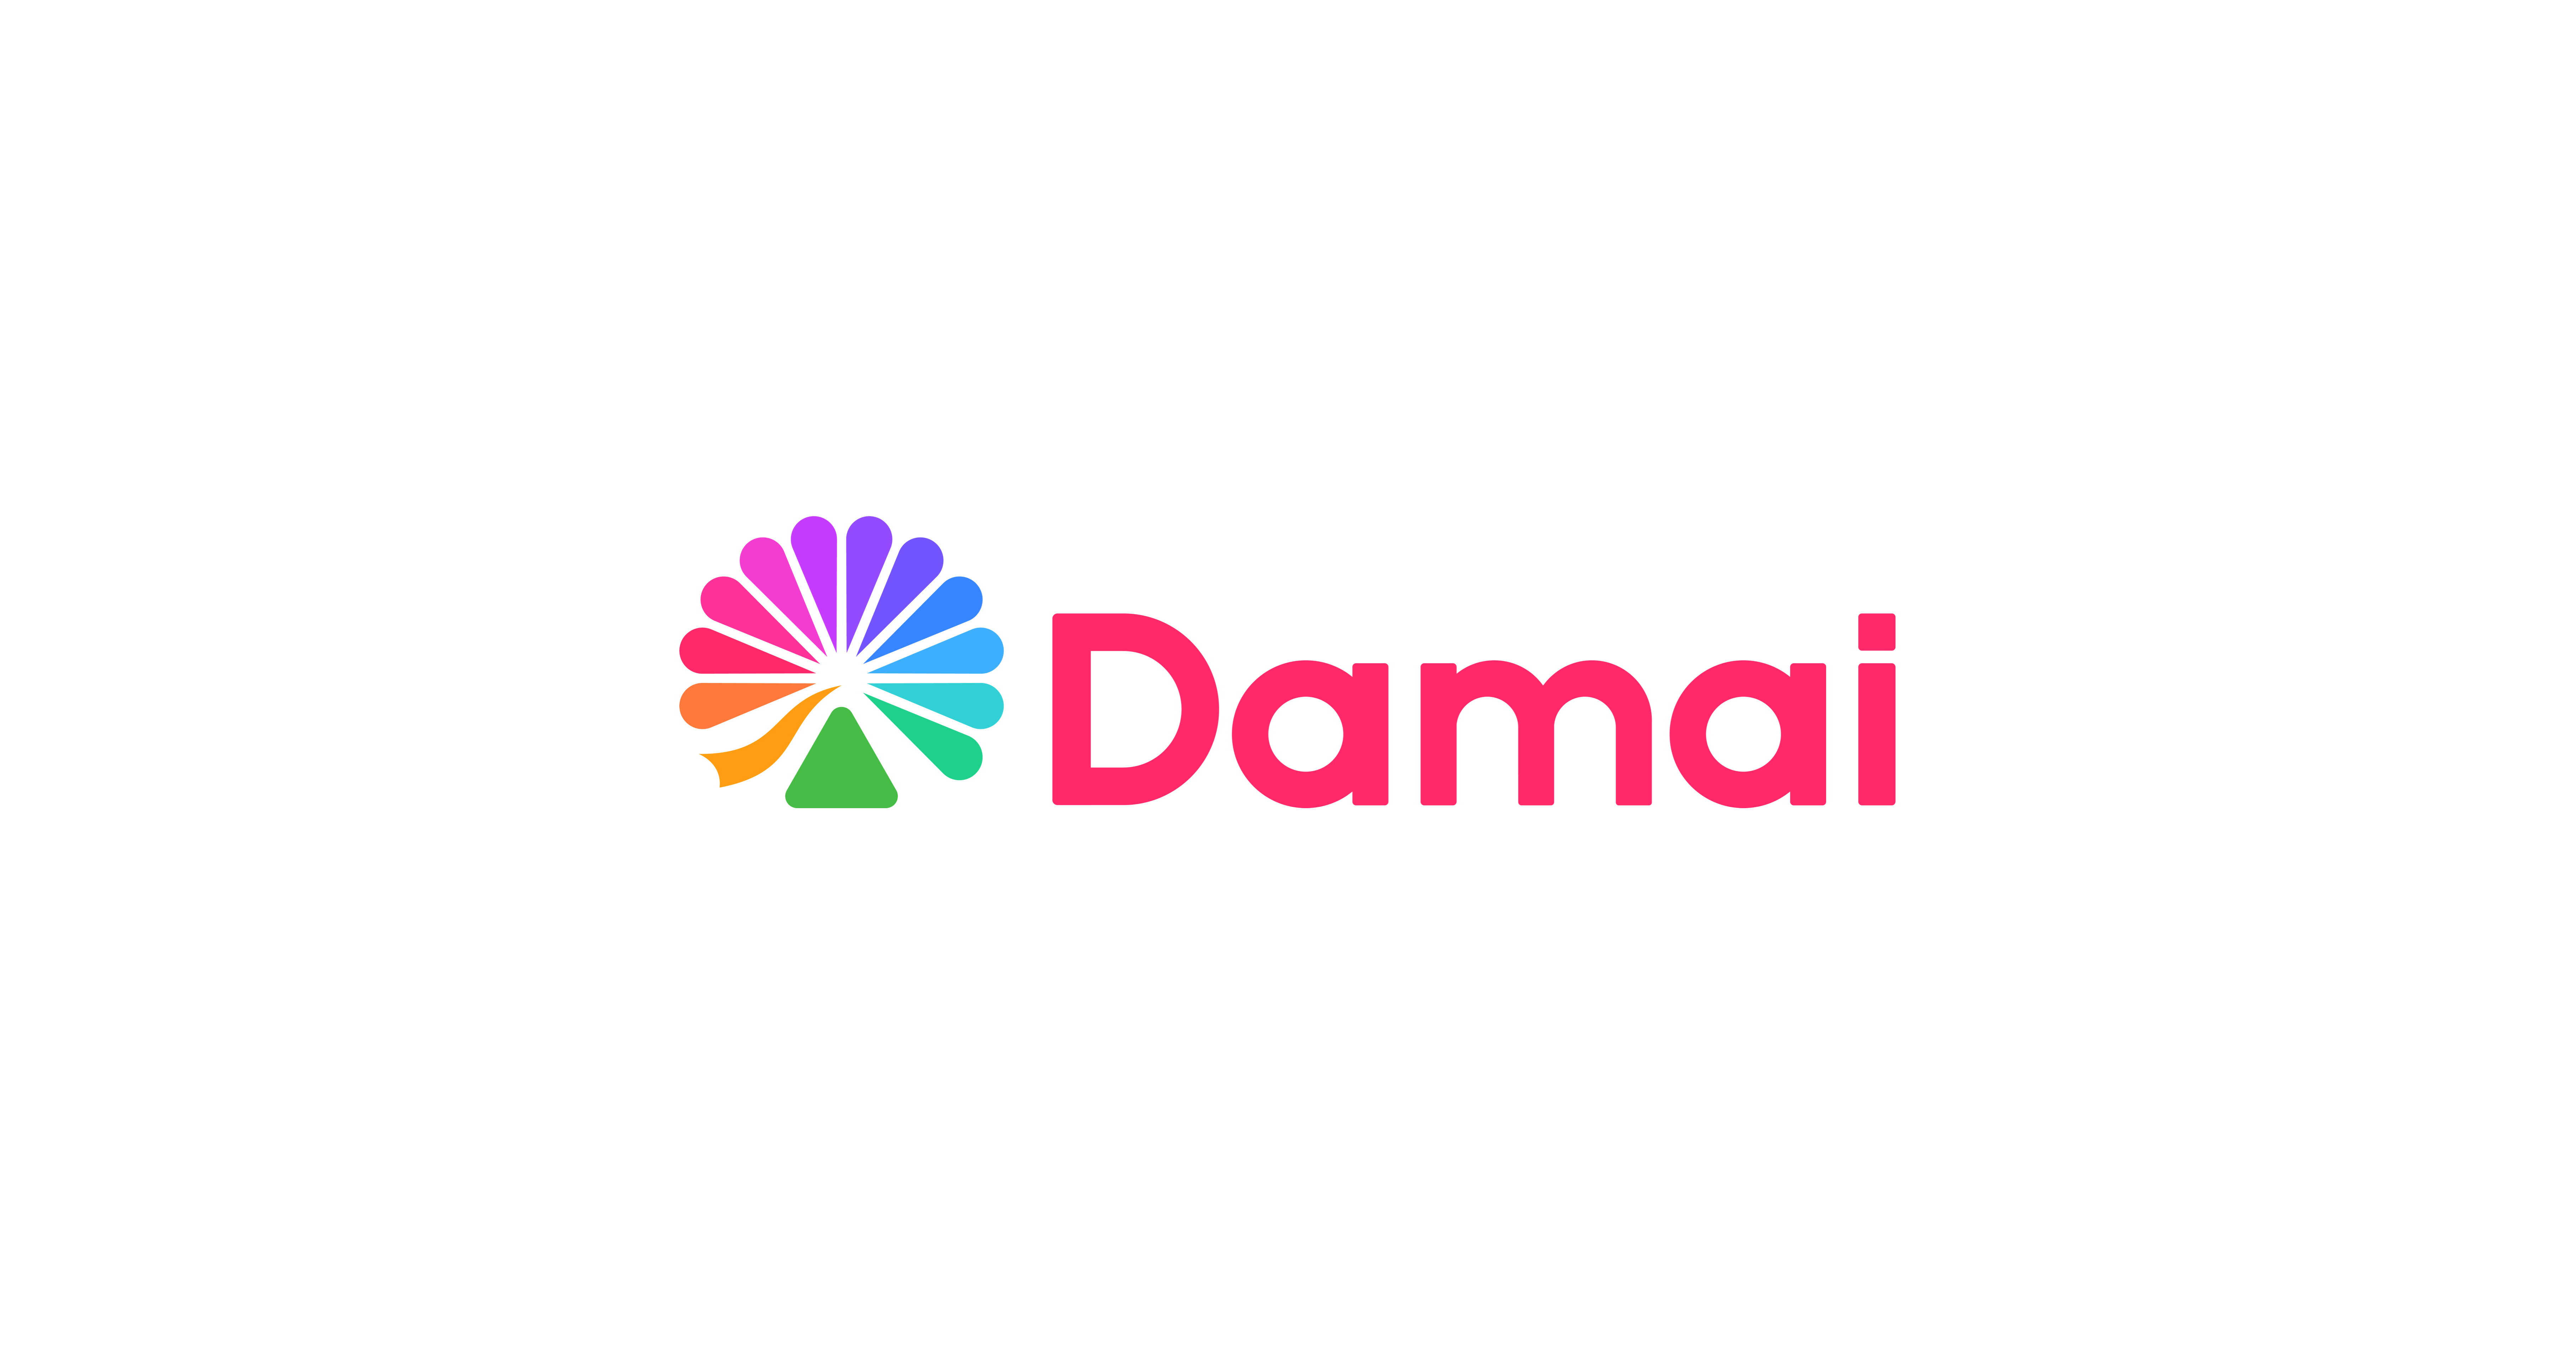 Damai, The official webshop